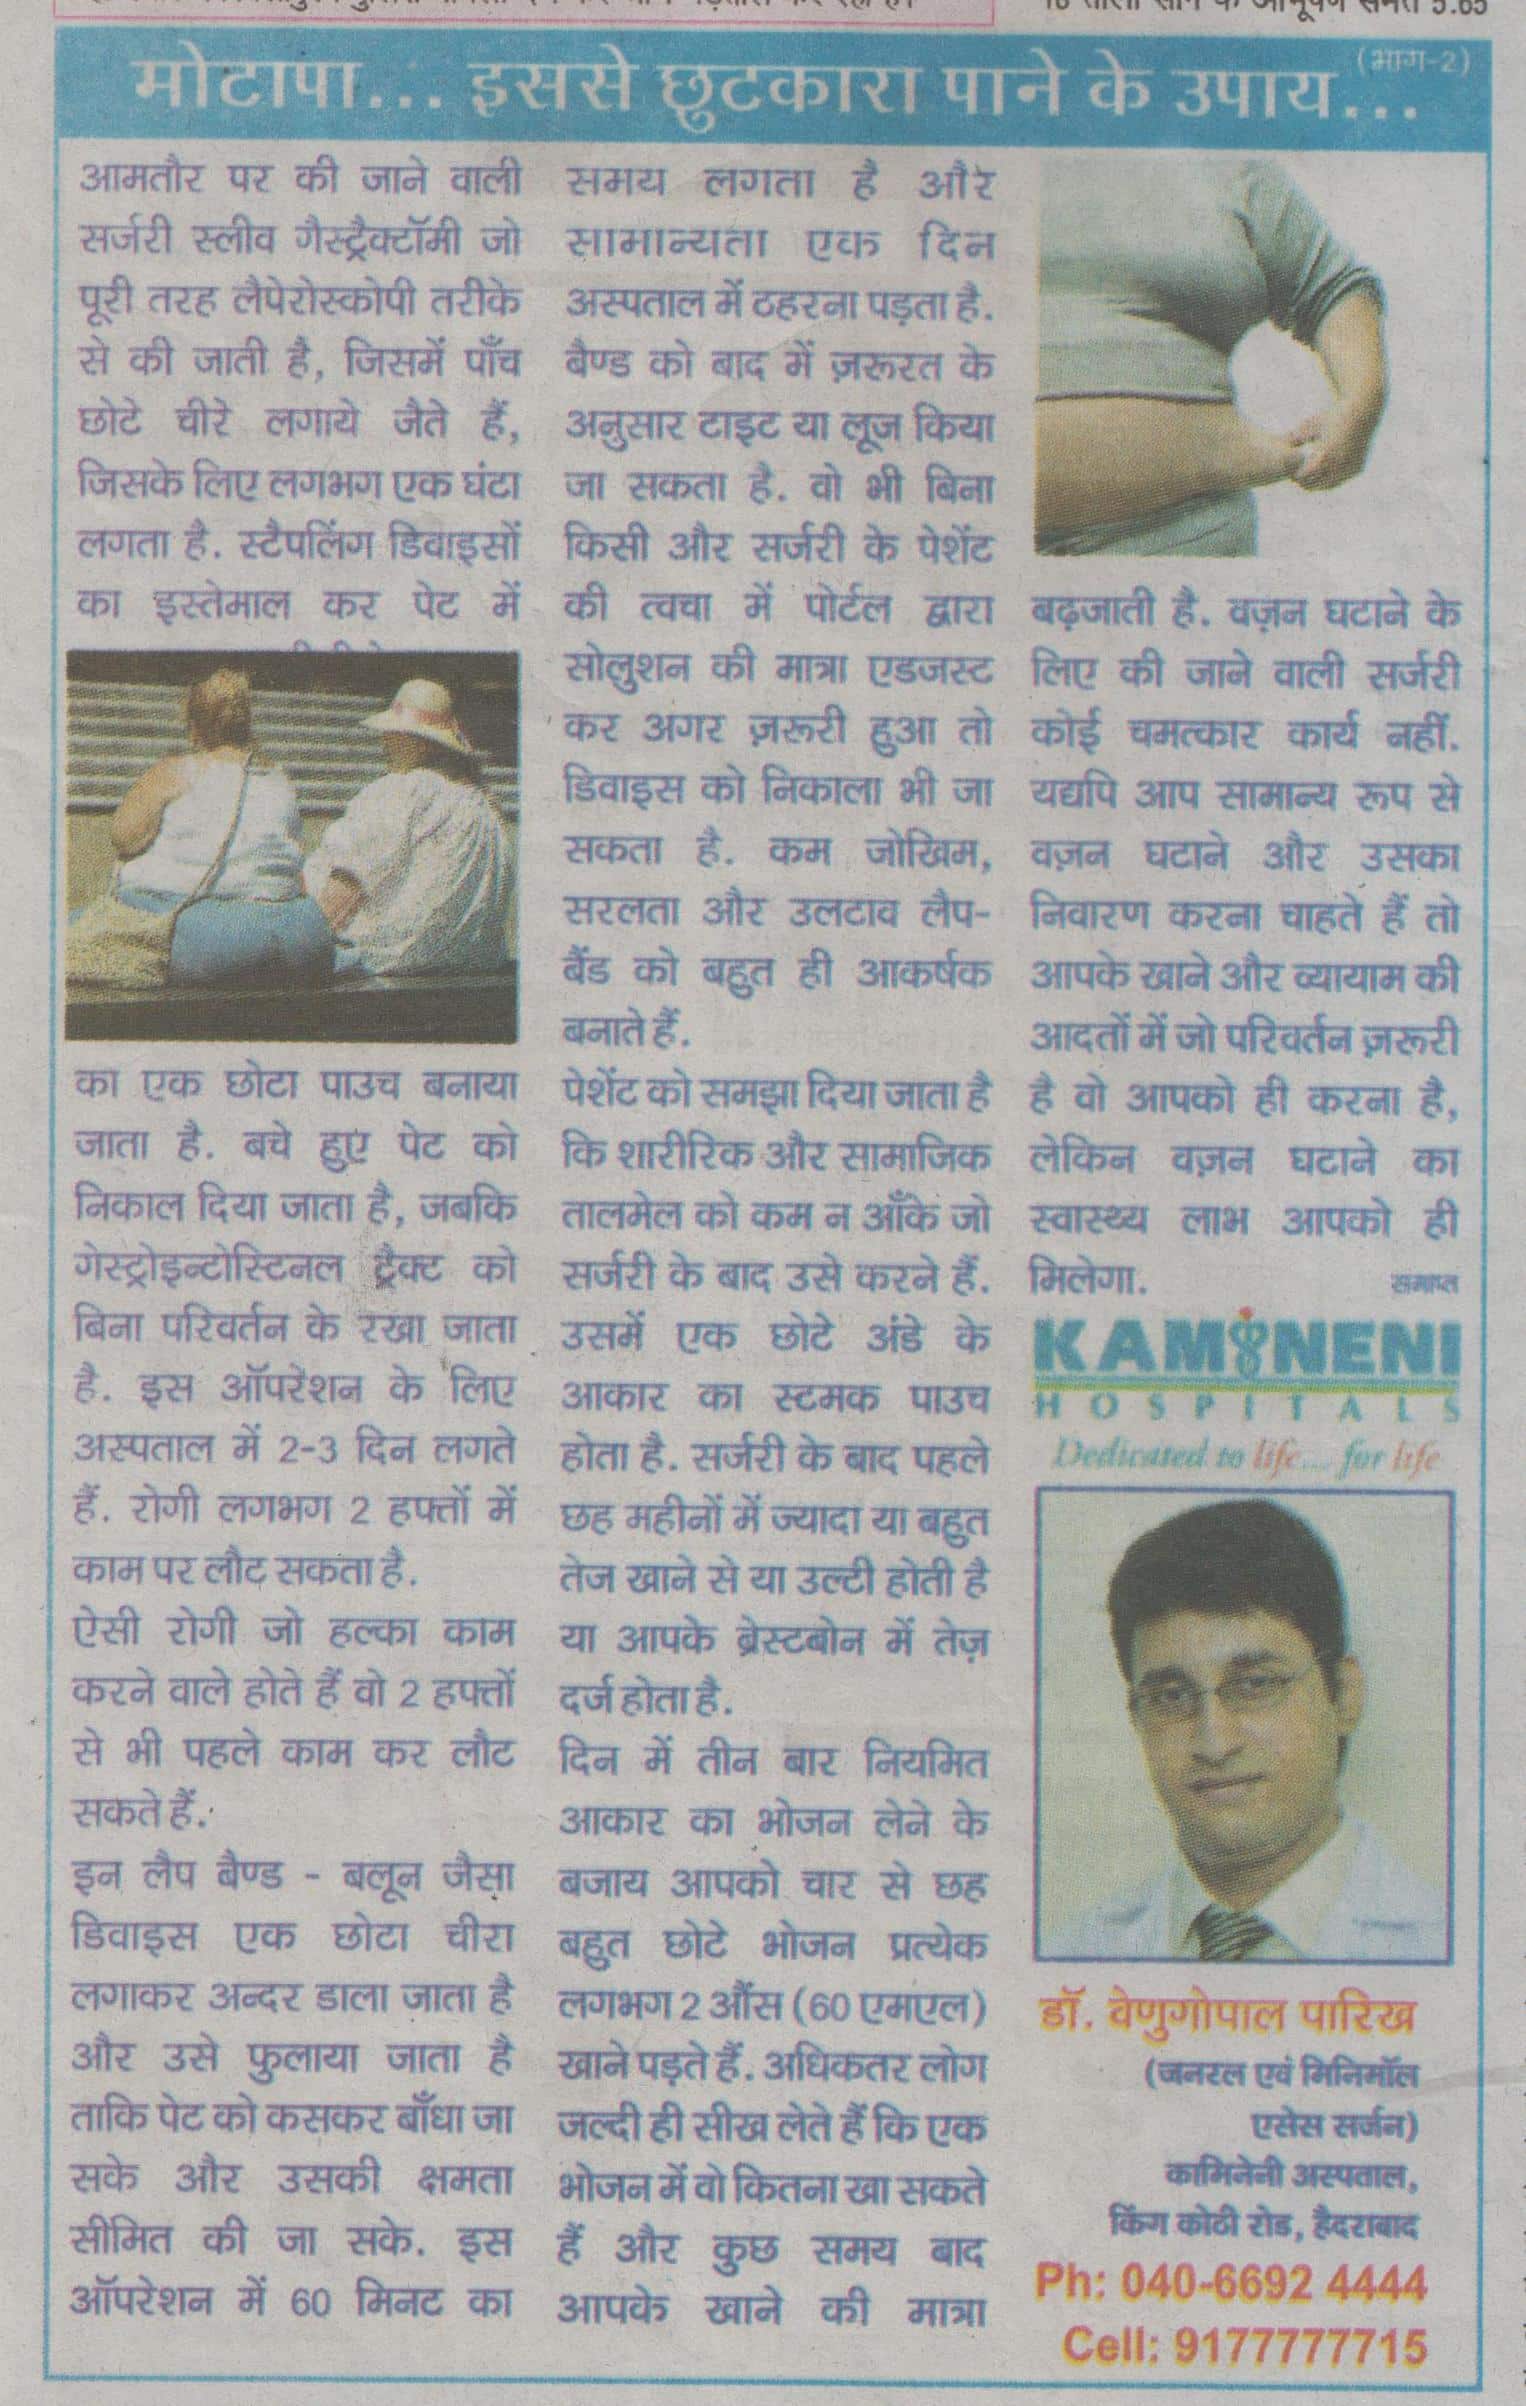 Motapa kam karne ke liye, find weight loss tips in hindi by Dr Pareek